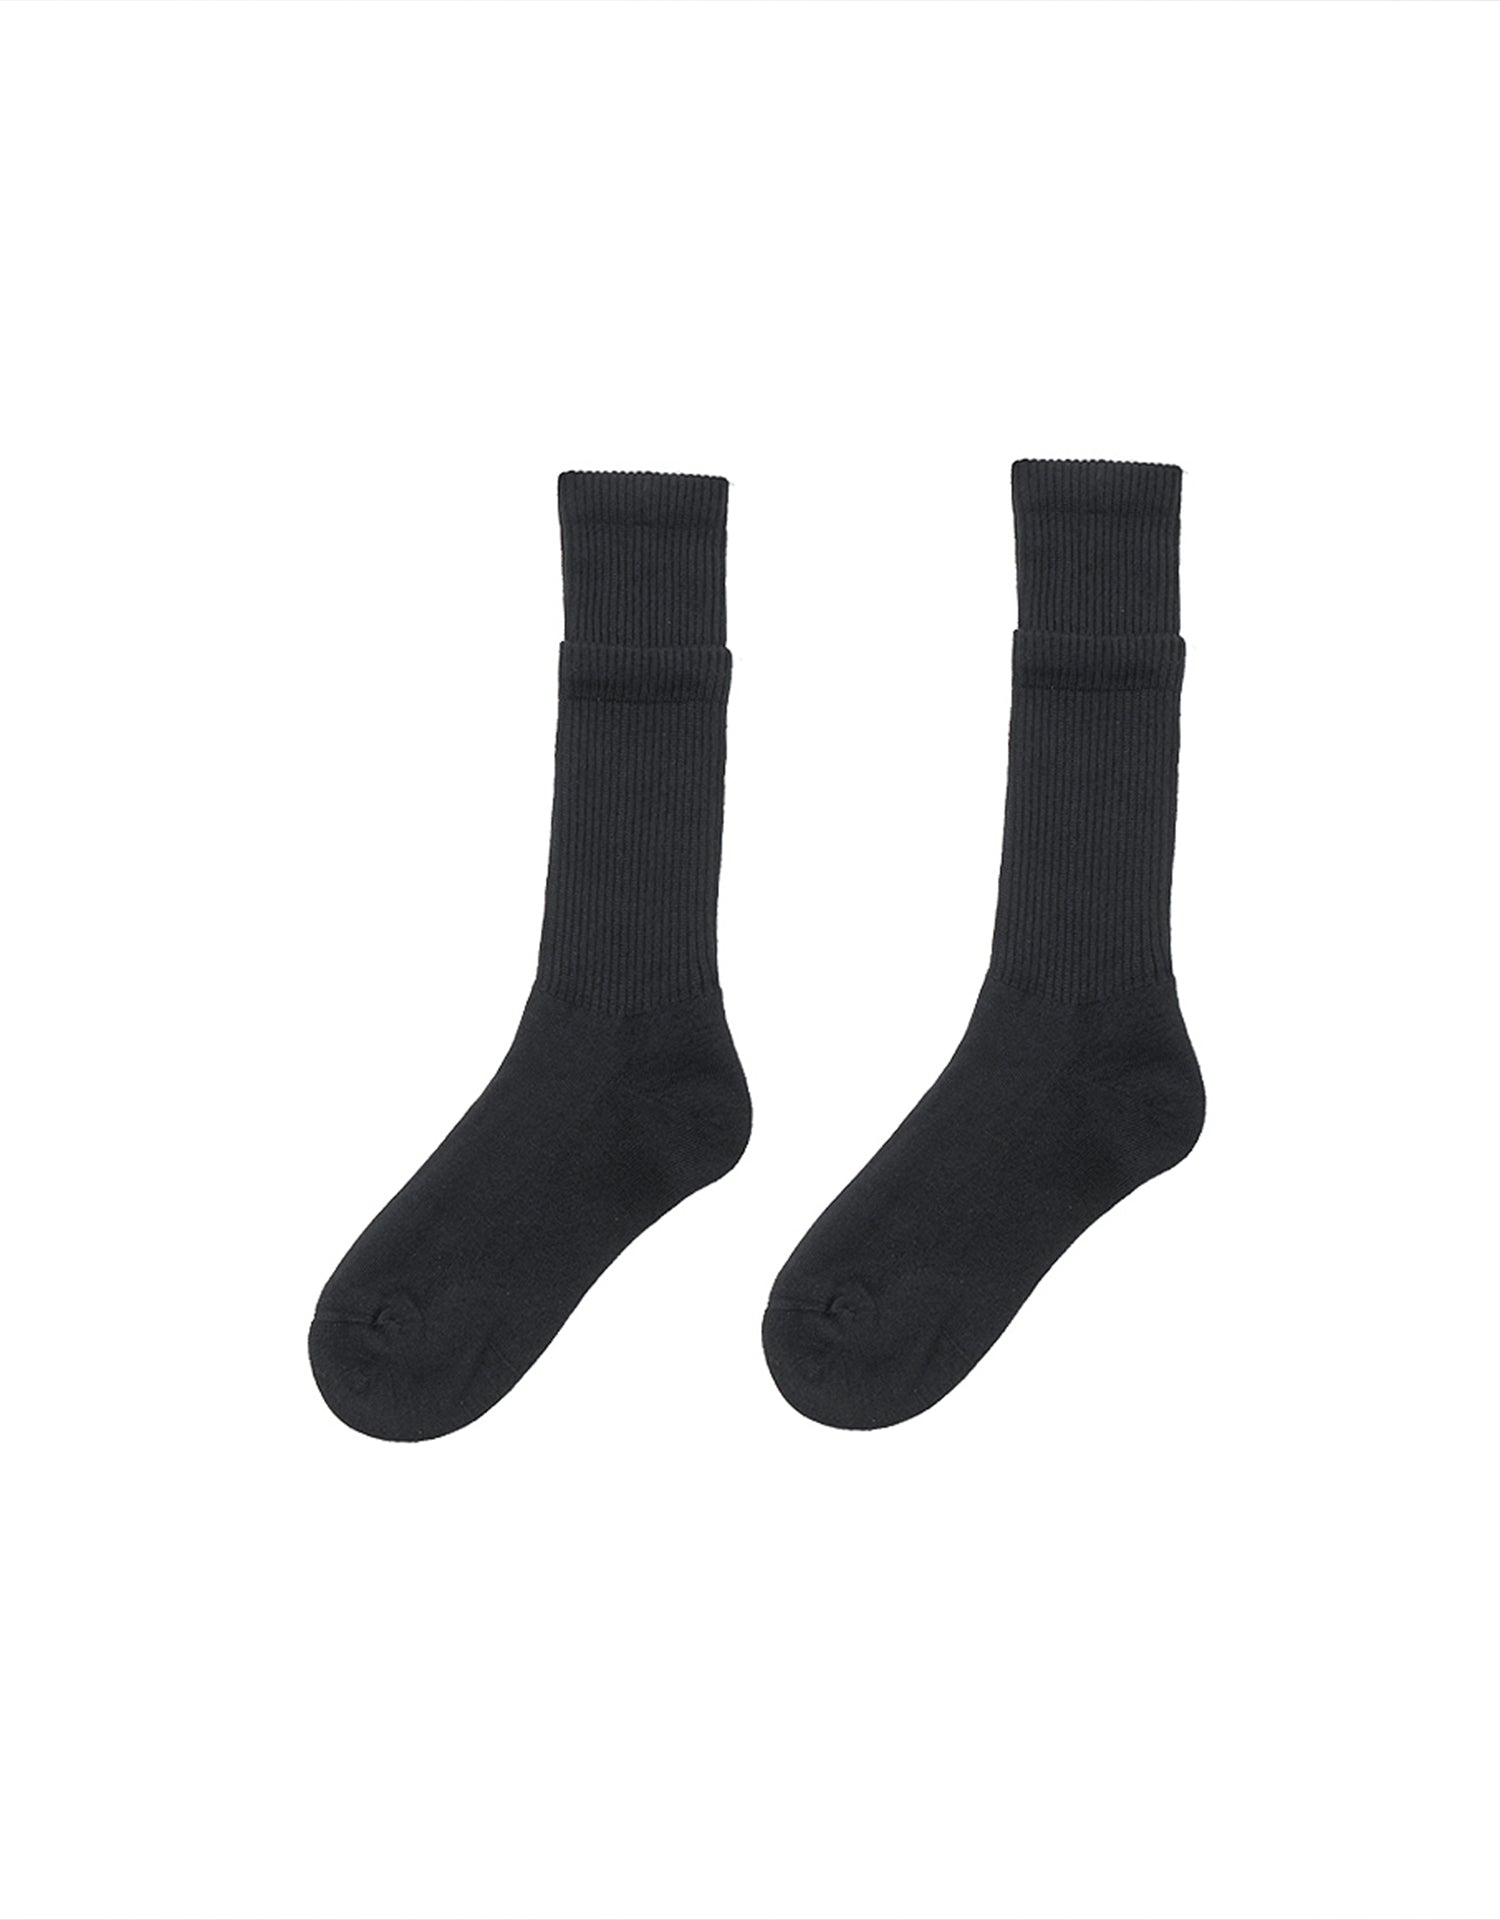 TopBasics Faked Two-Piece Socks